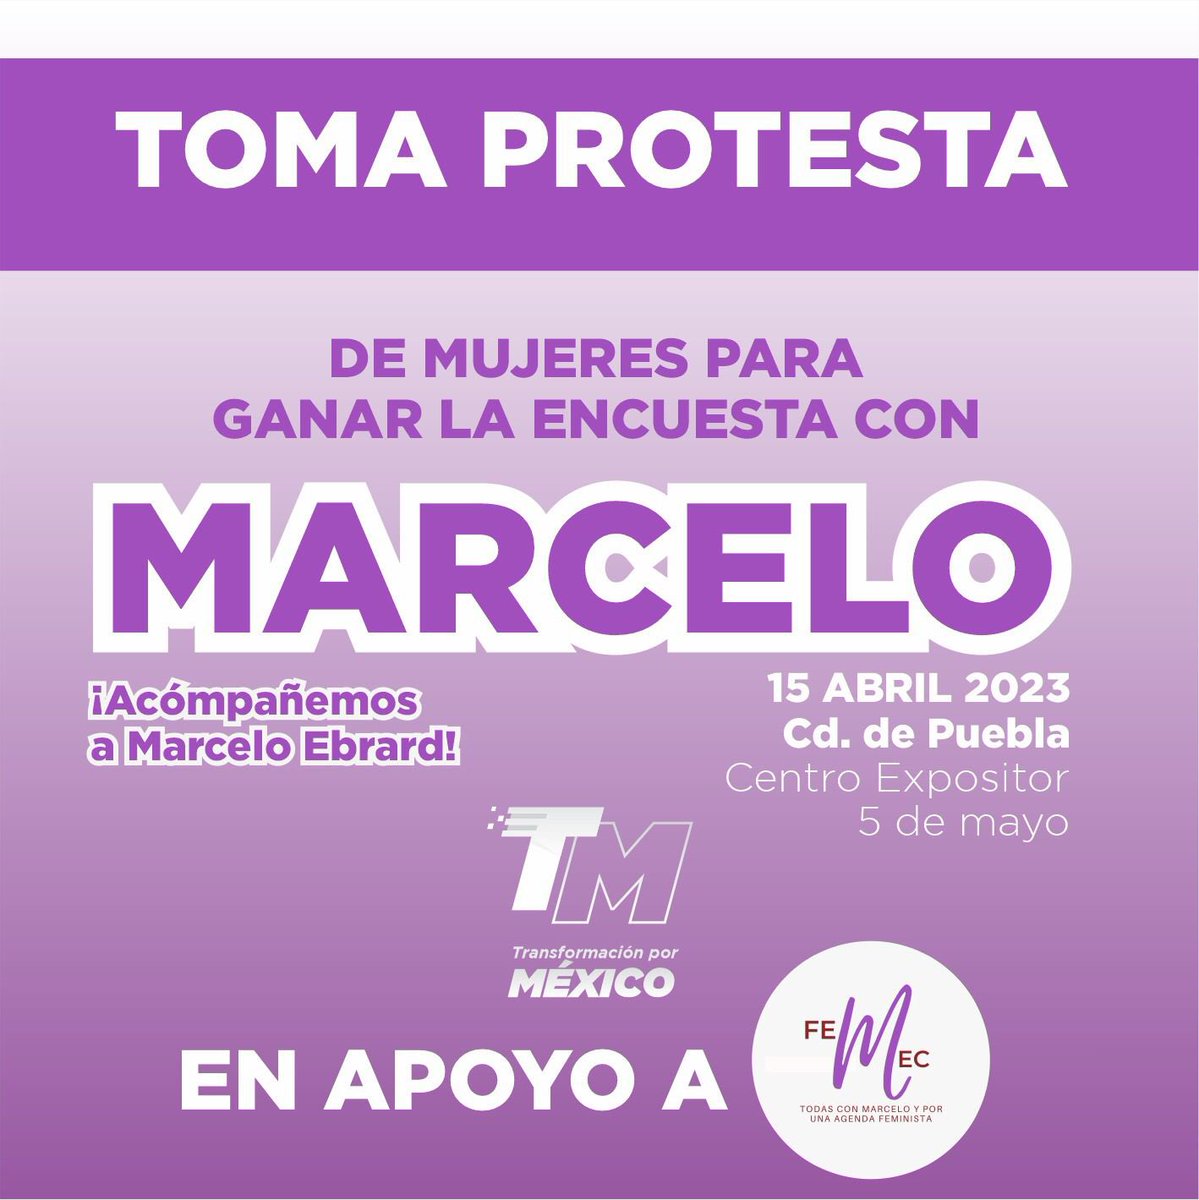 Hoy @m_ebrard realizará la toma de protesta a miles de mujeres en 
📍 Centro Expositor de Puebla 
🕑 12:00 P.M.

#FEMEC
#TransformaciónPorMéxico  #Femec #ConMarceloSi #TlaxcalaConMarcelo #PueblaConMarcelo #FeministasConMarcelo #MujeresConMarcelo #TodesConMarcelo